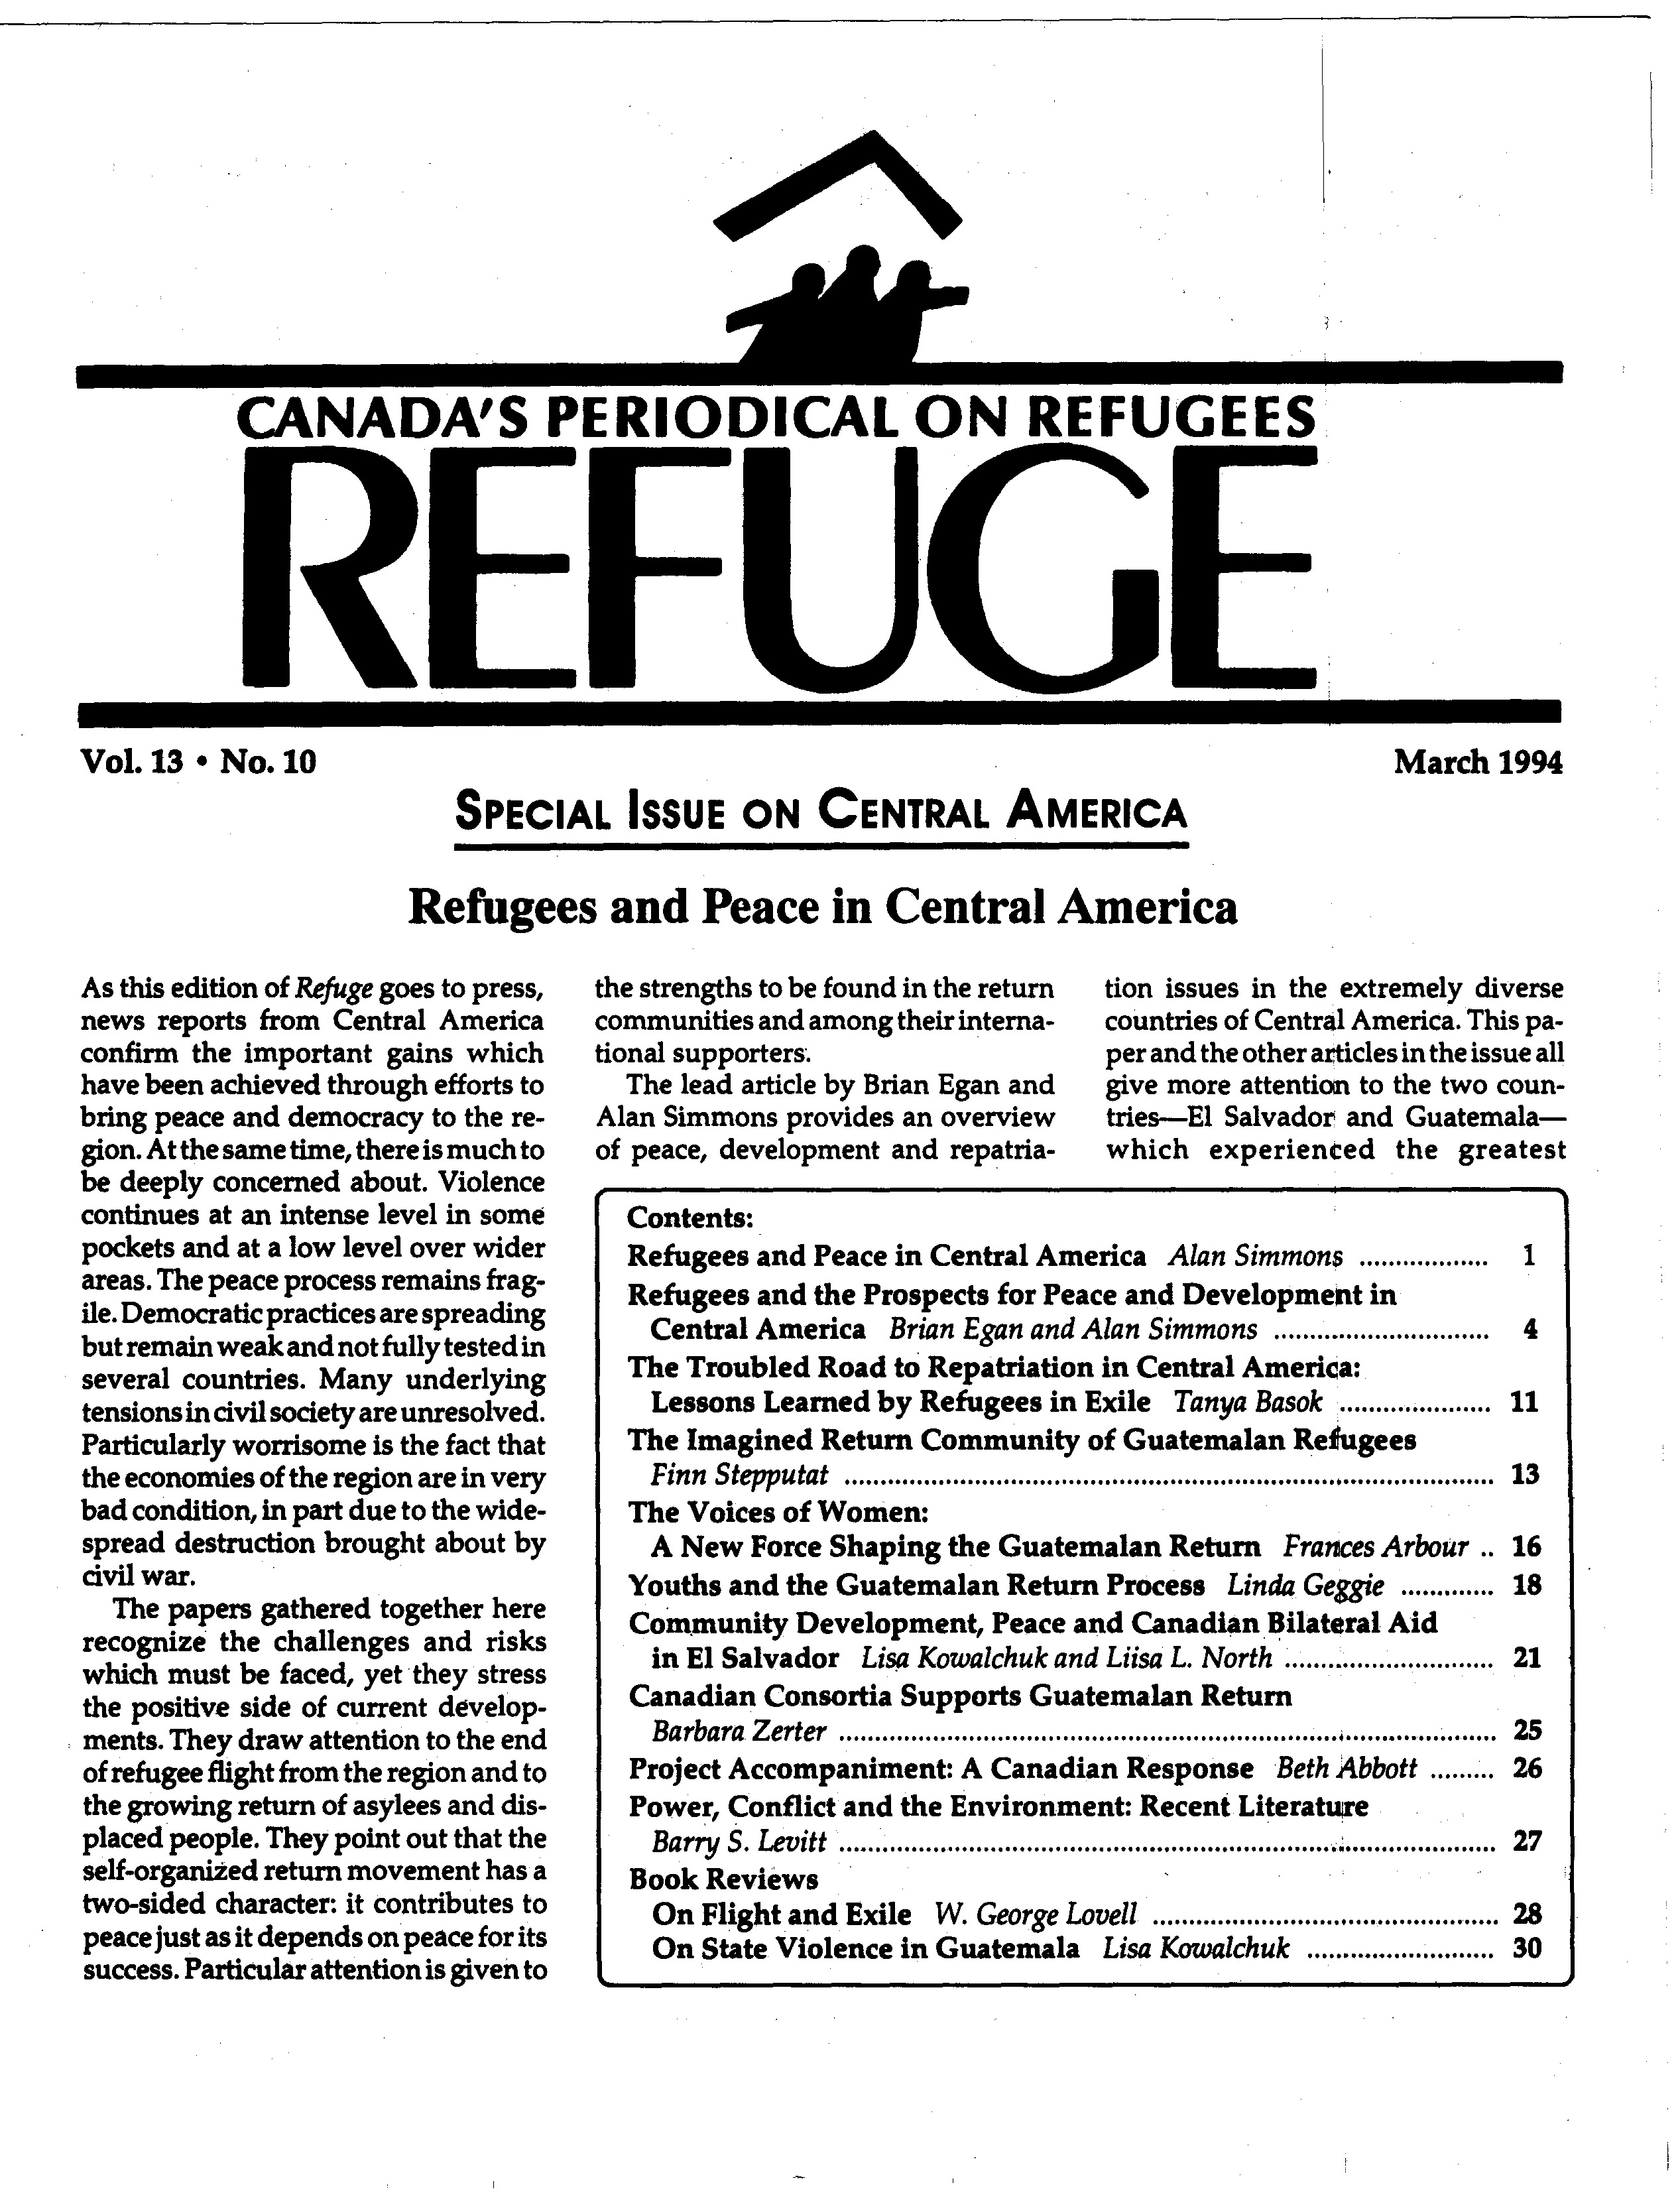 first page Refuge vol. 13.10 1994